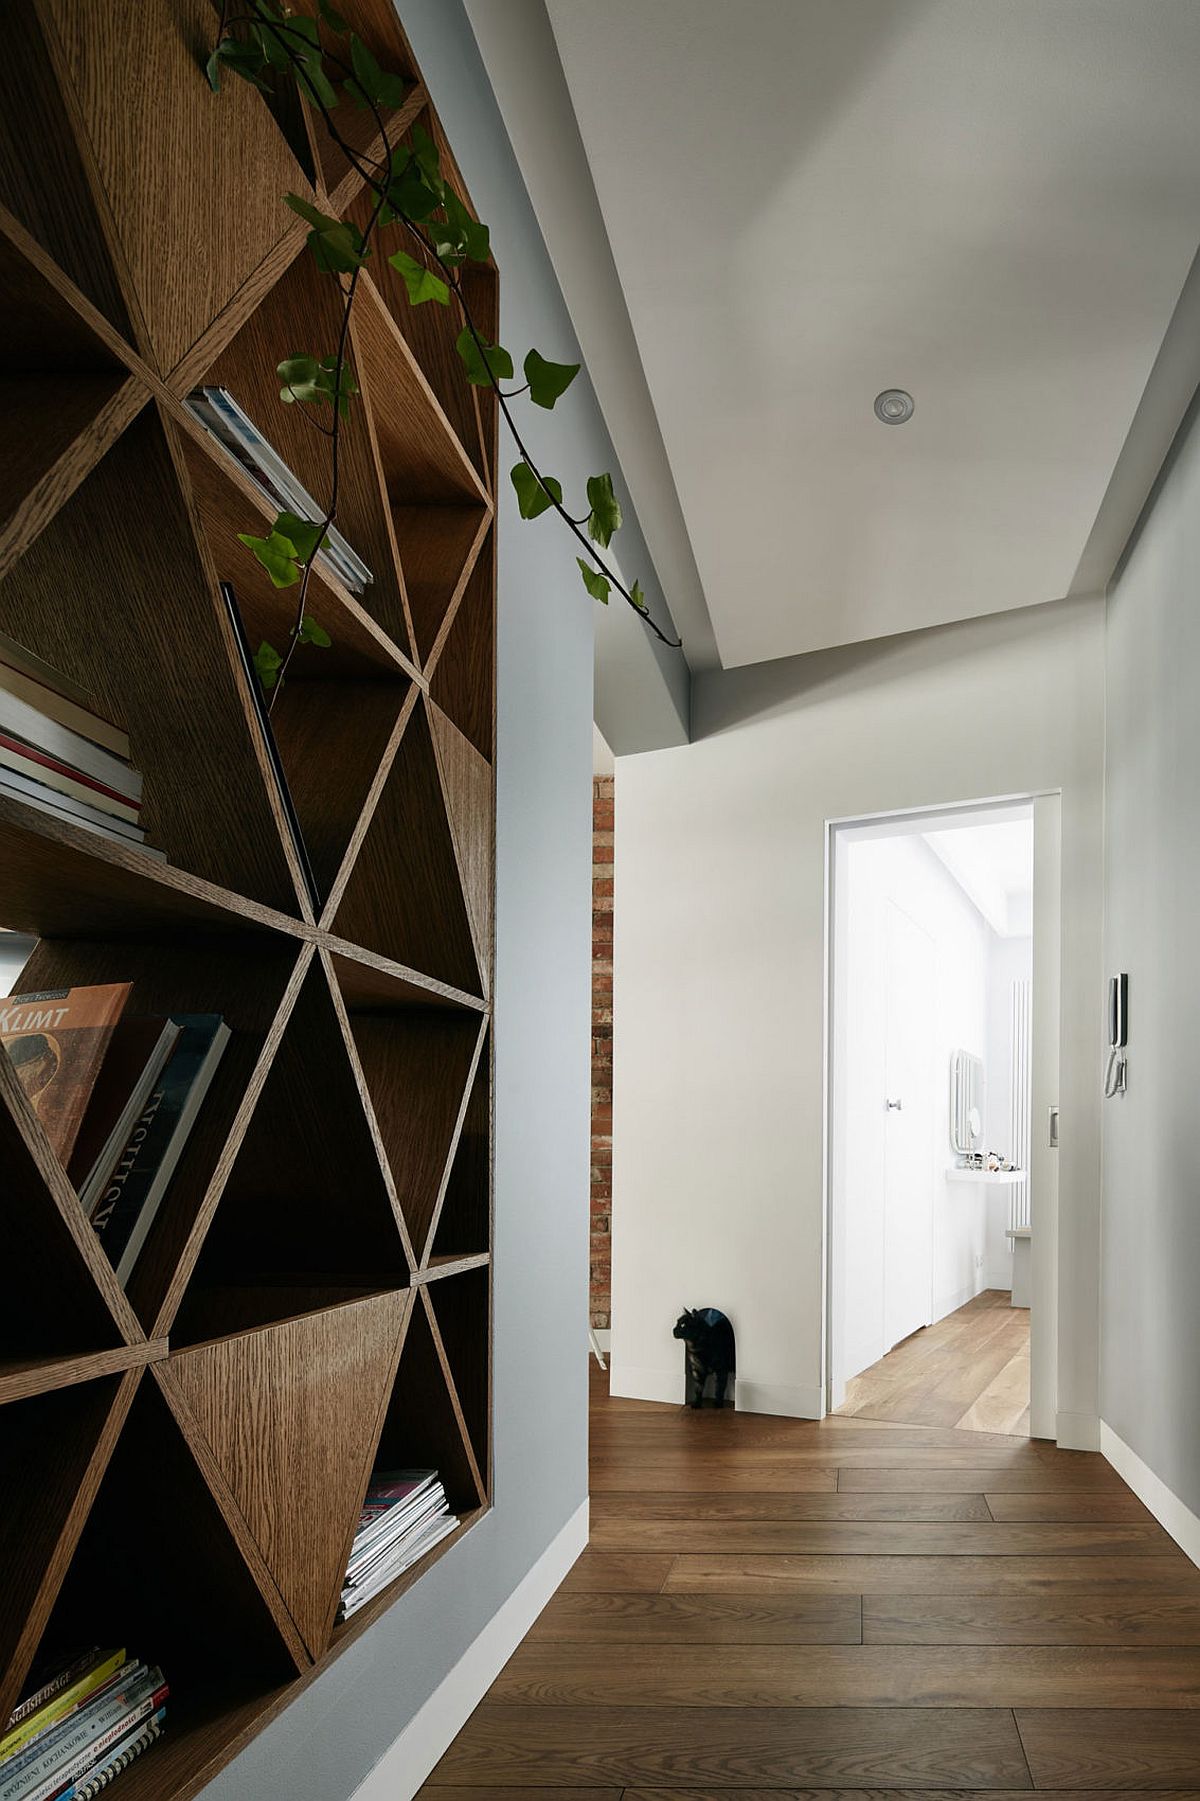 Wooden bookshelf with geo style